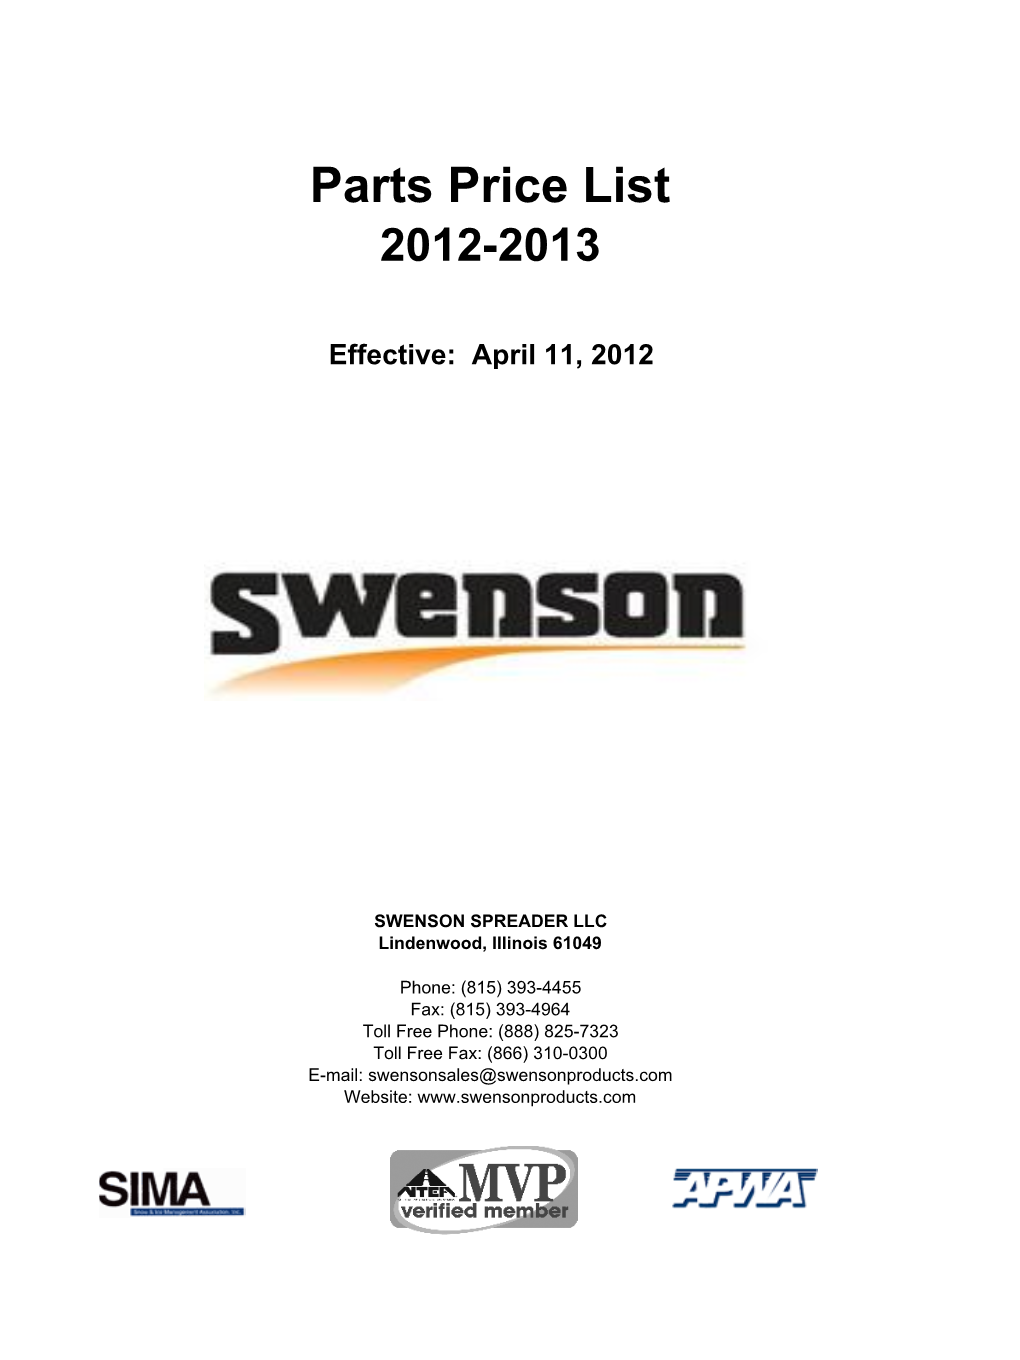 Swenson Parts Price List 2012-2013